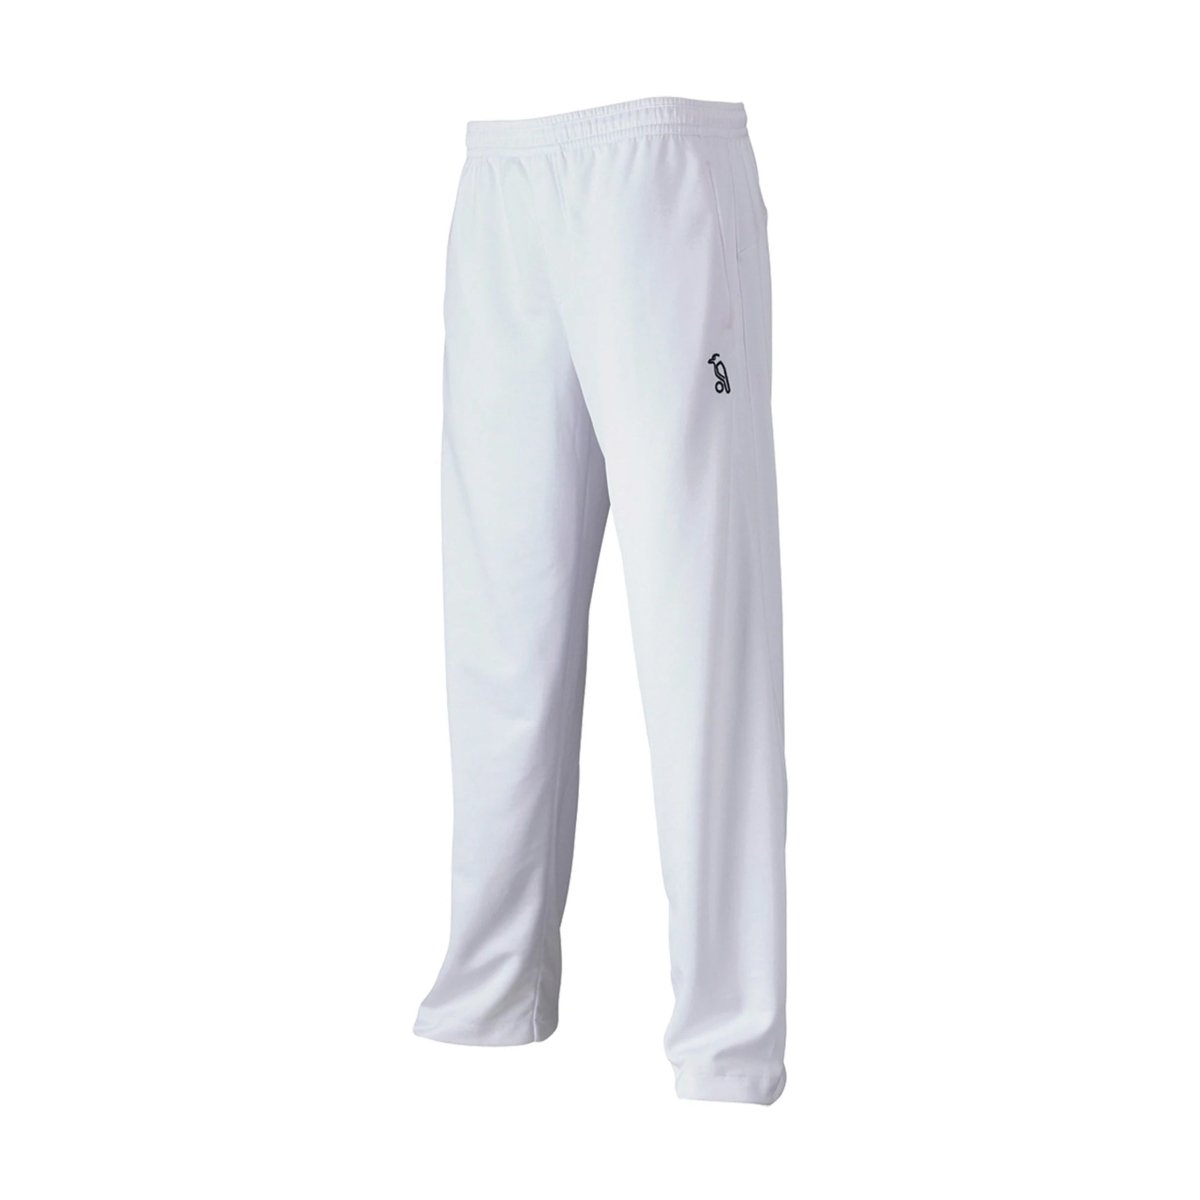 Kookaburra Pro Active Cricket Pants White